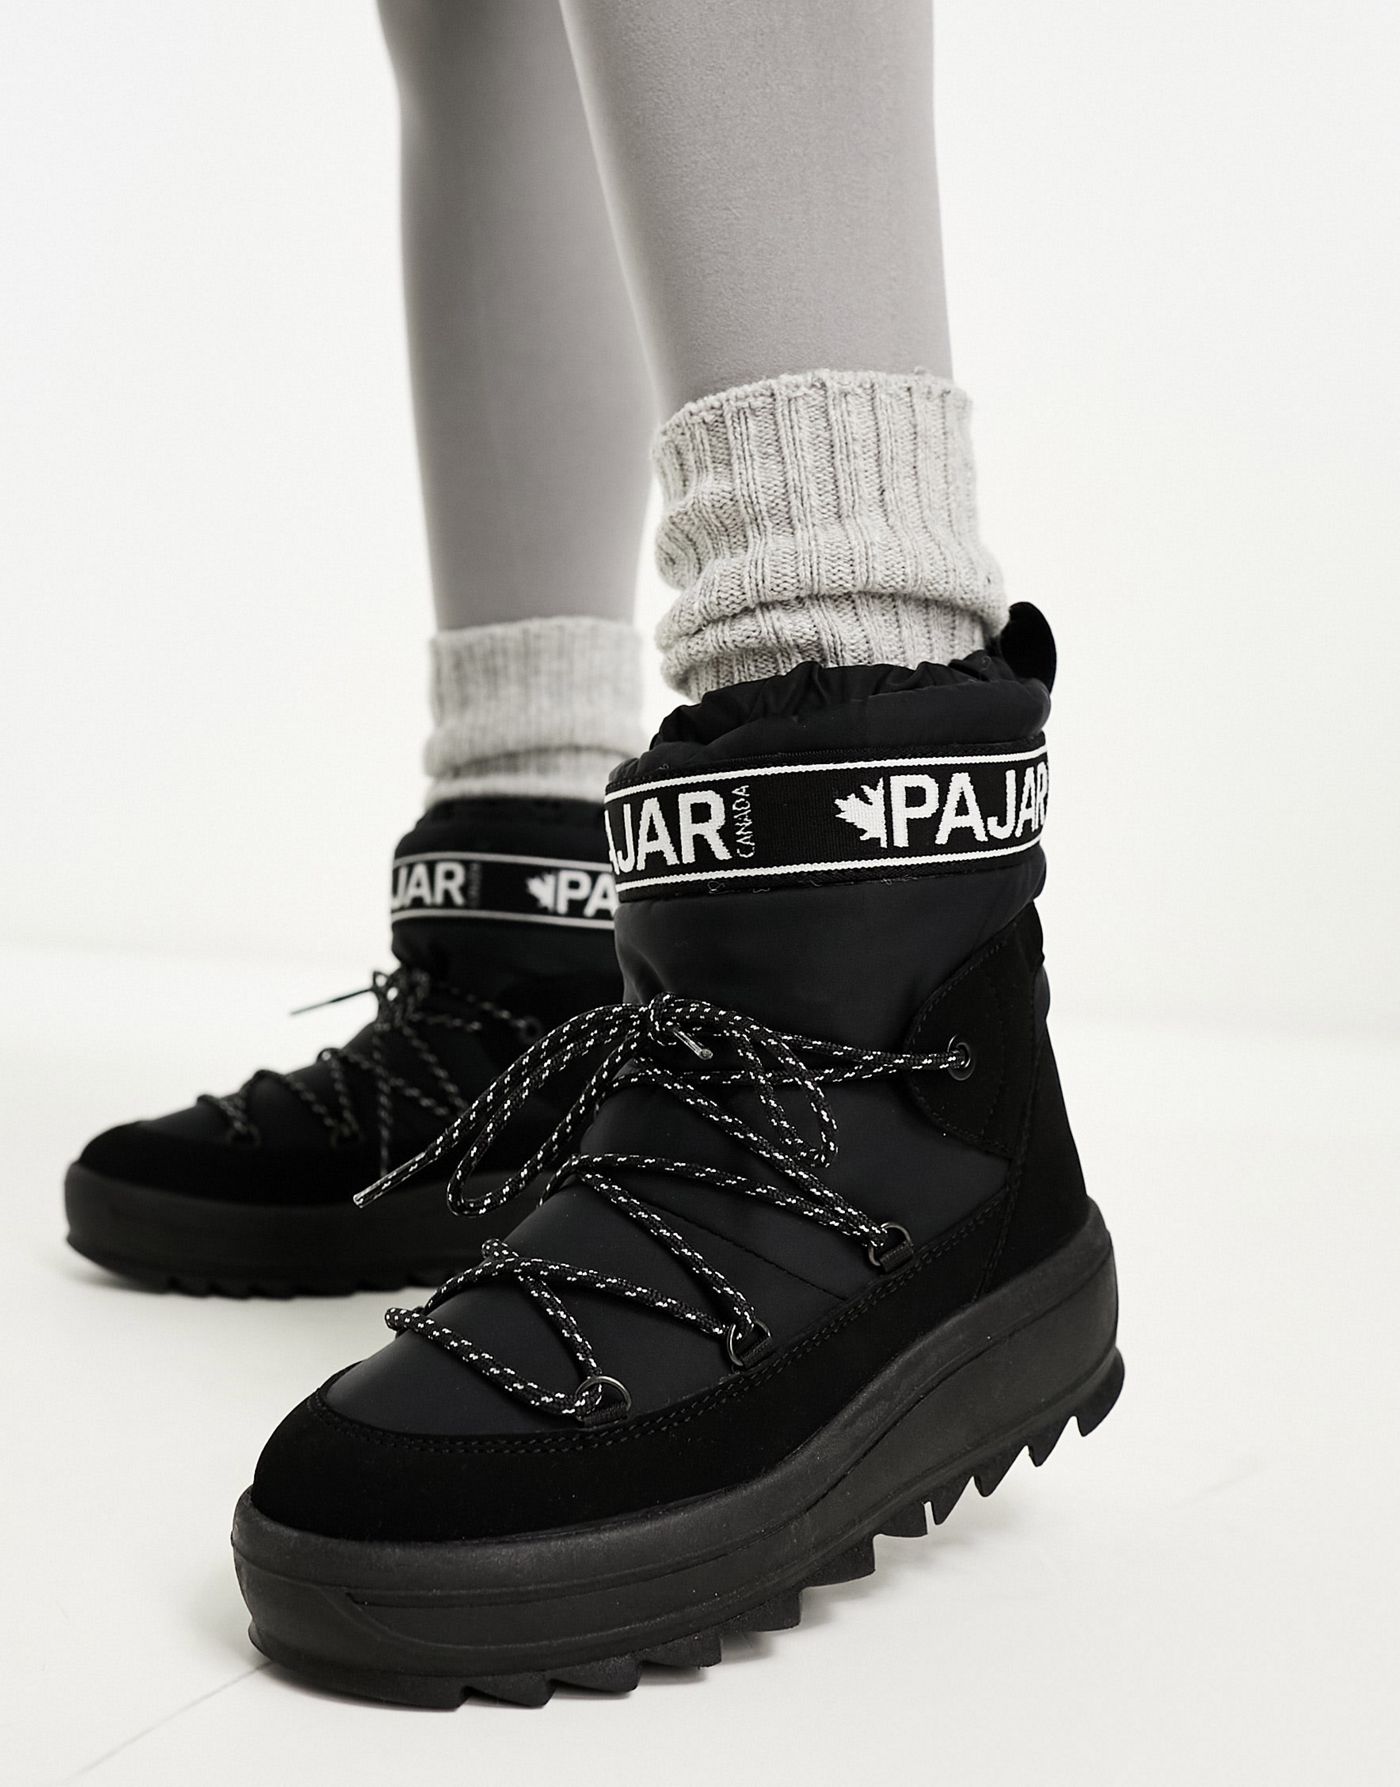 Pajar snow boots in black